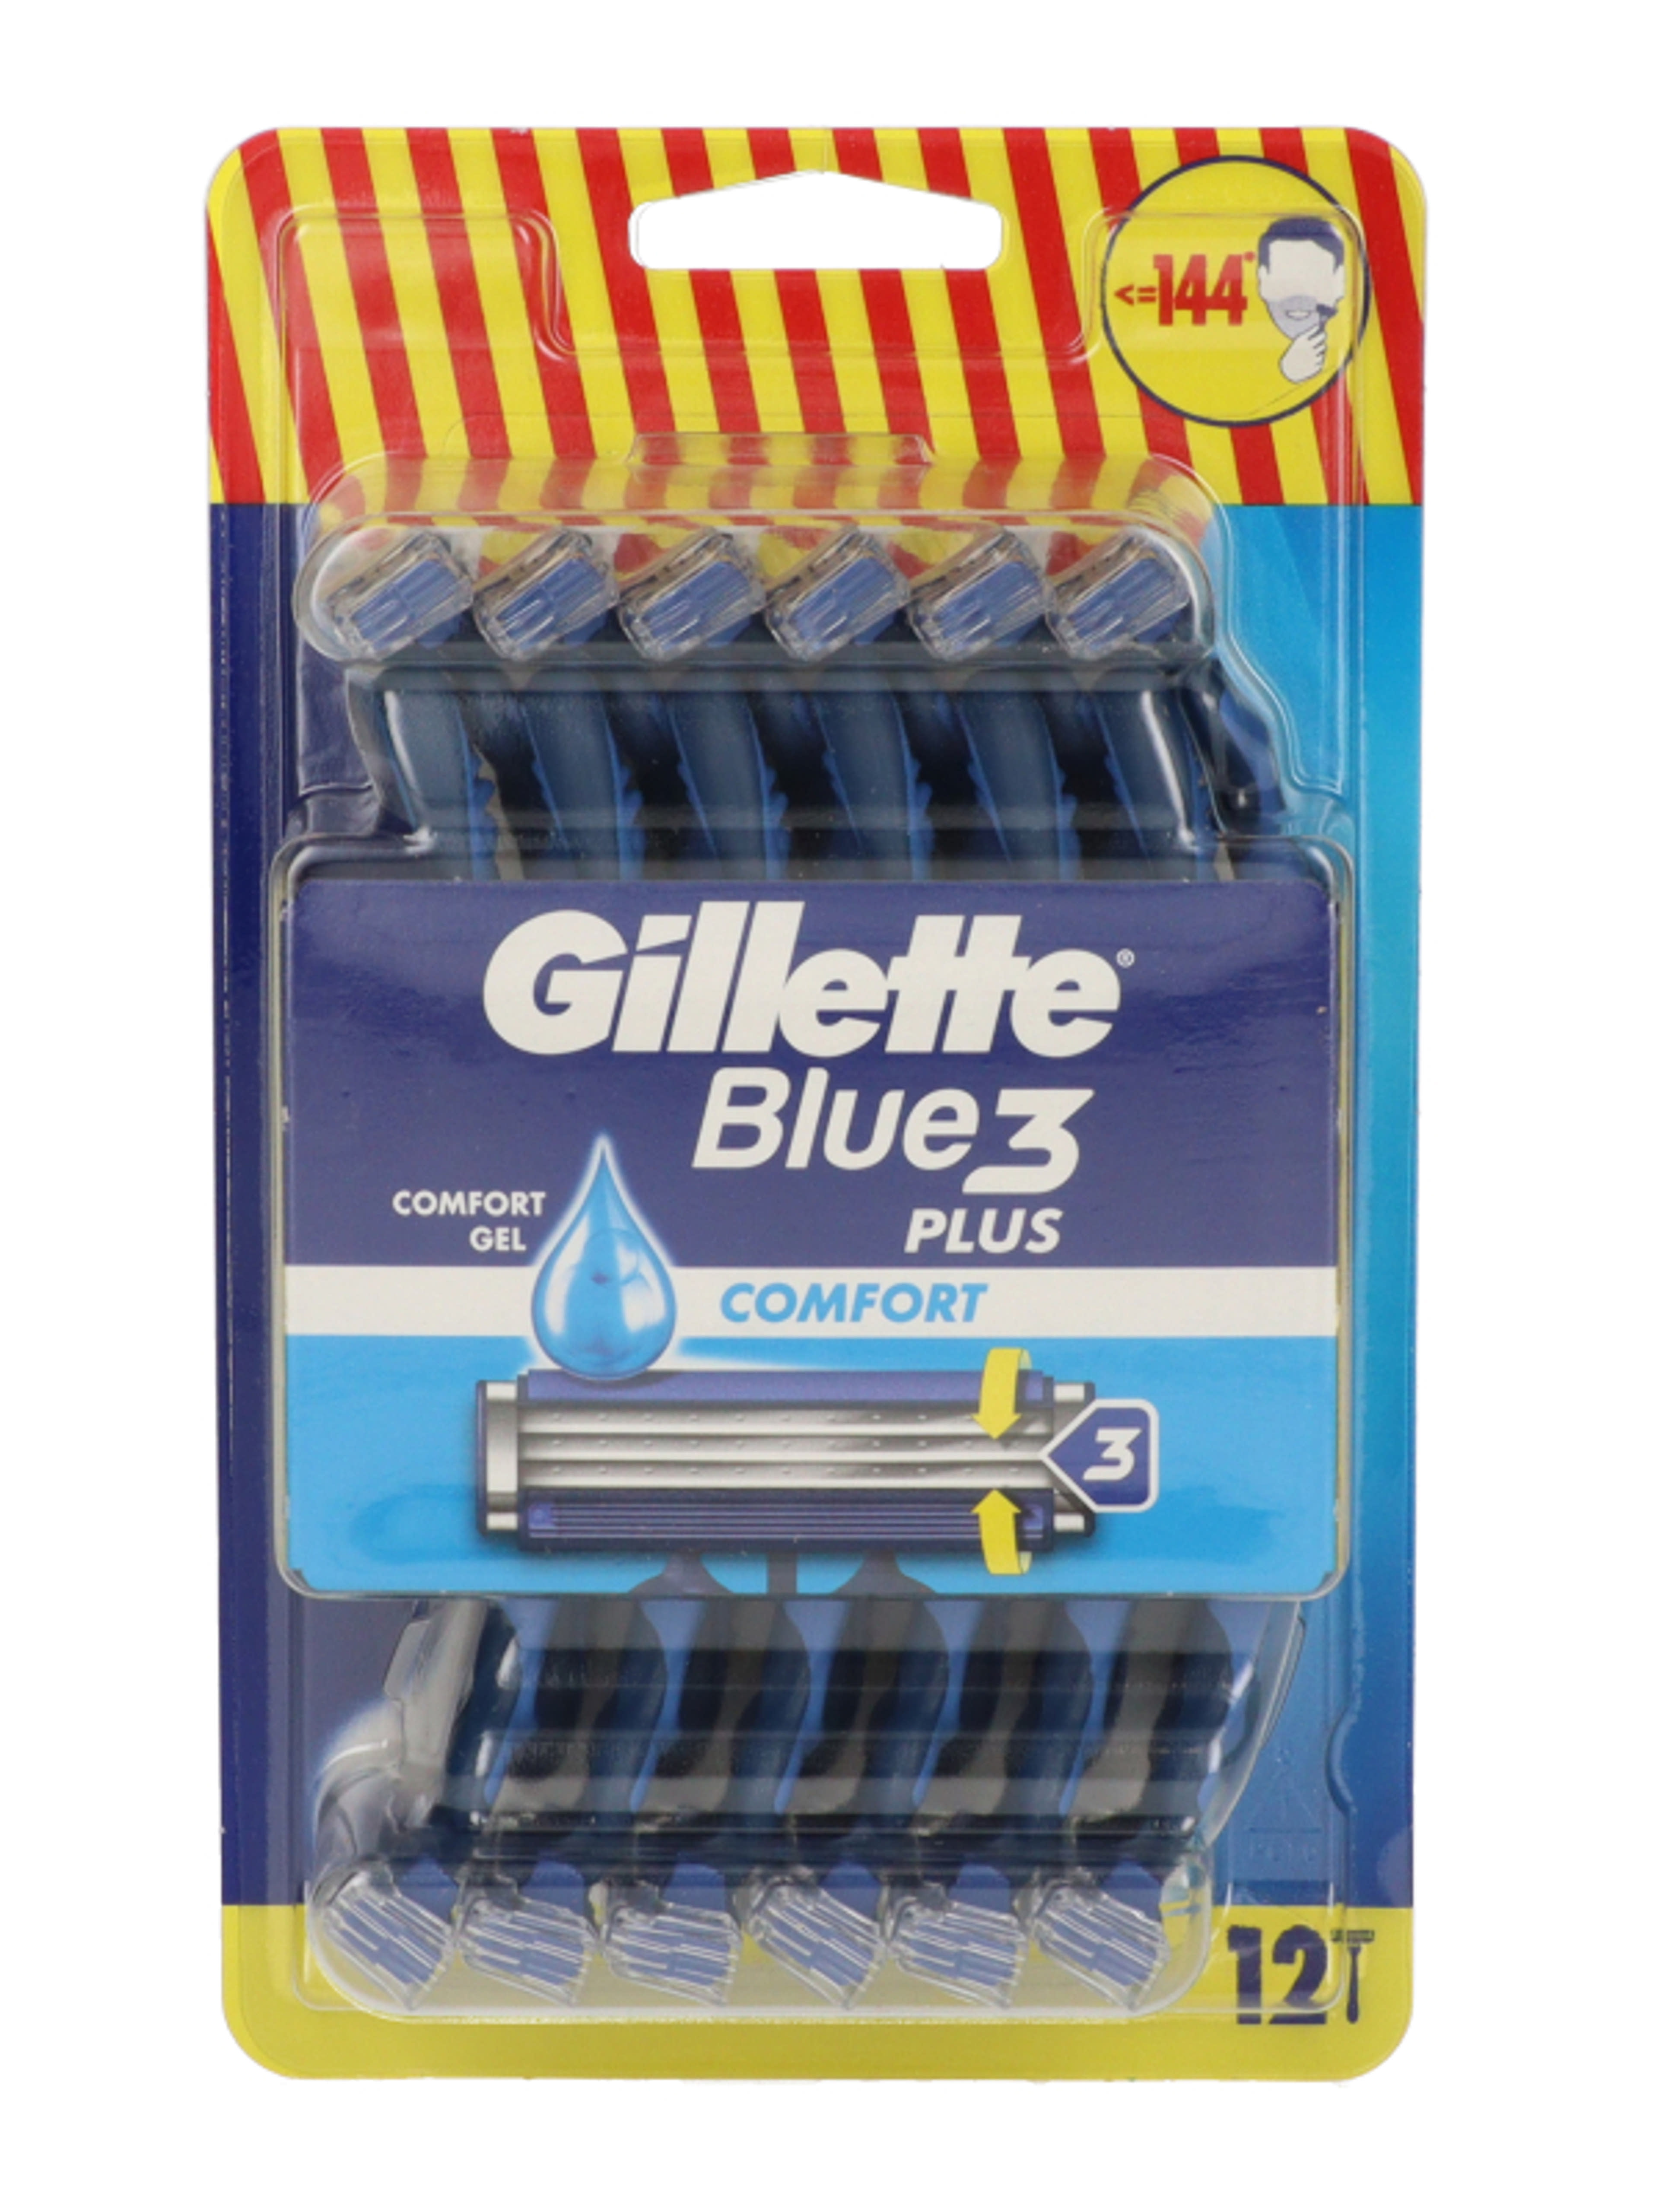 Gillette Blue3 Comfort eldobható borotva 3 pengés - 12 db-8